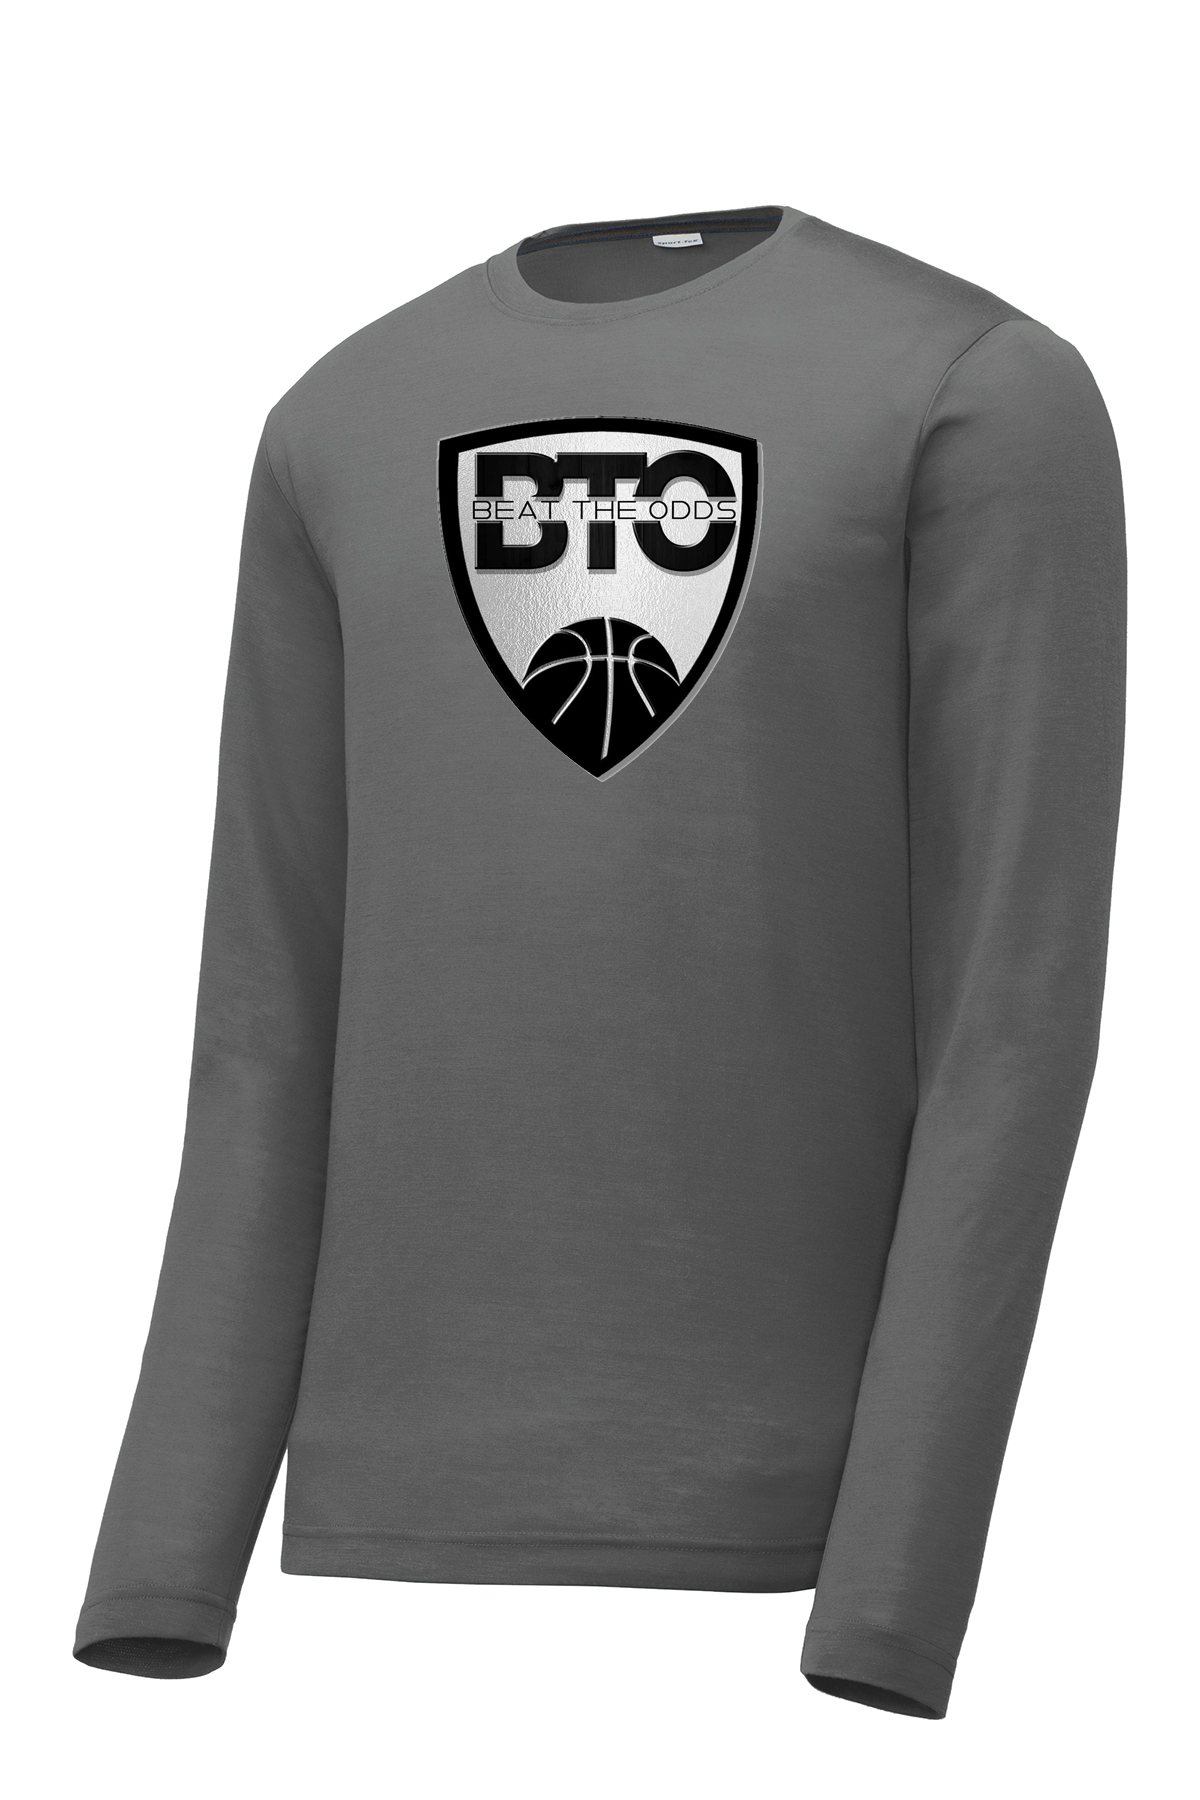 BTO Basketball Long Sleeve CottonTouch Performance Shirt